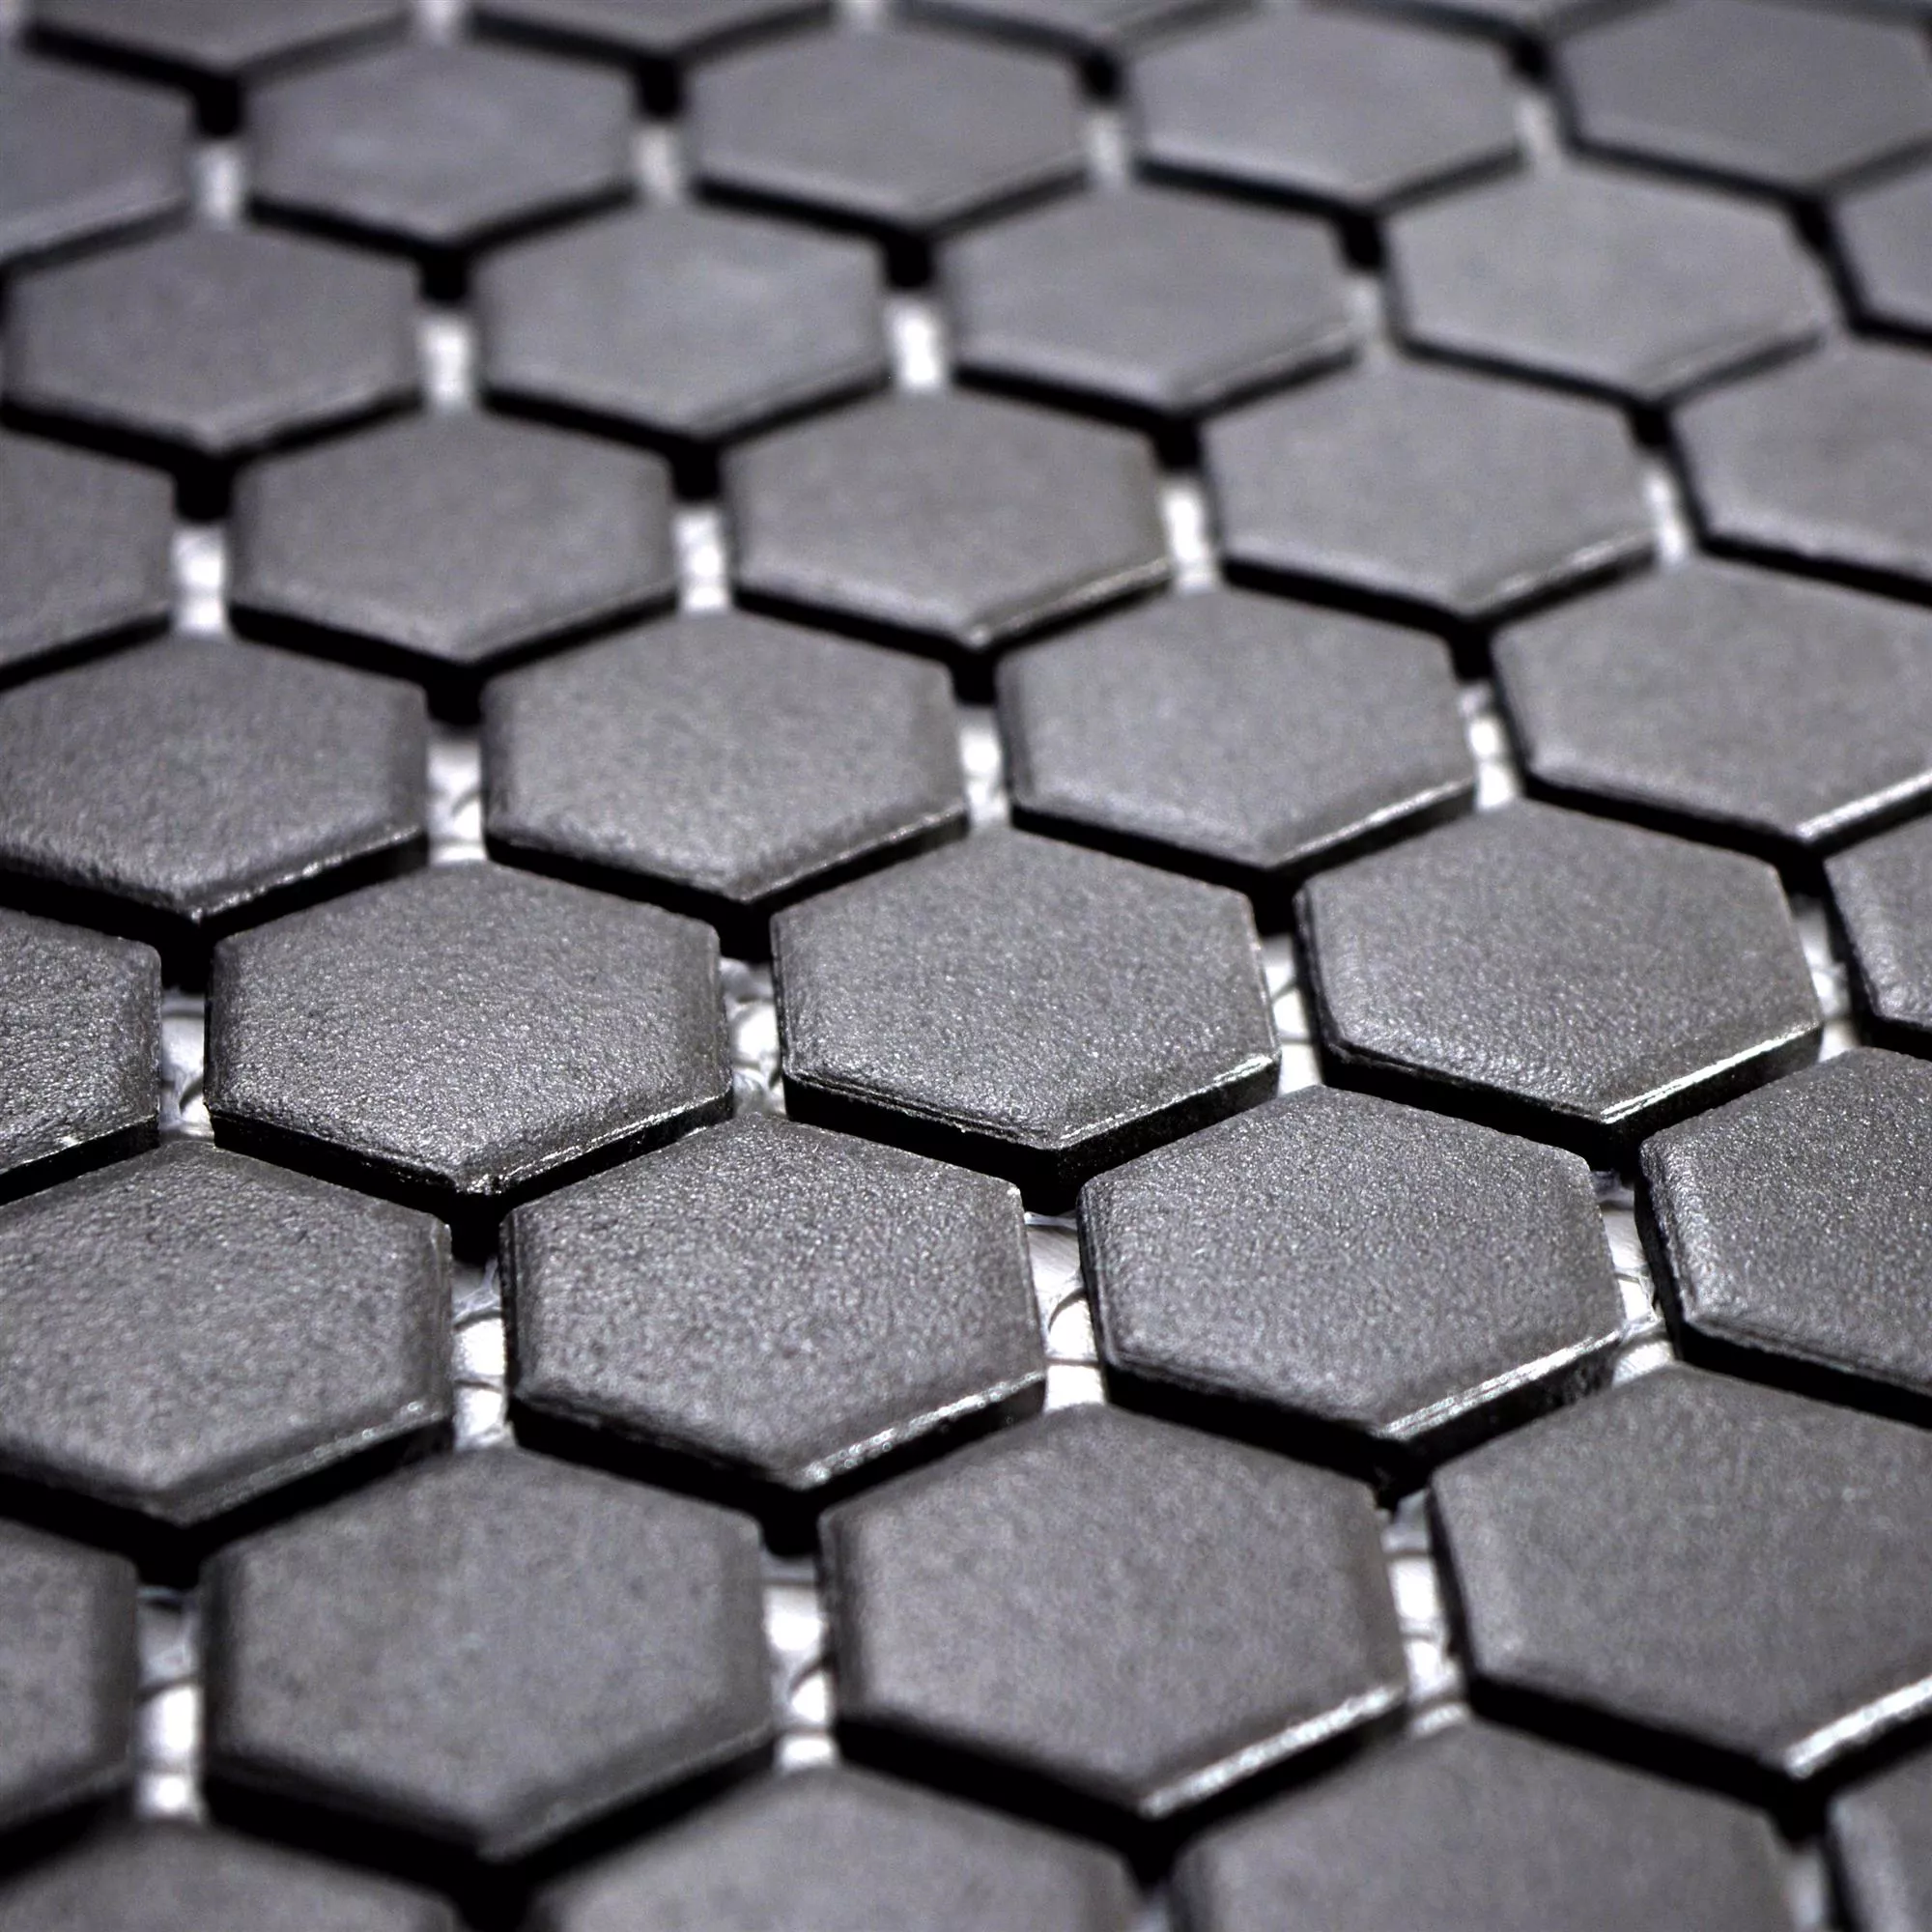 Ceramic Mosaic Tiles Hexagon Zeinal Unglazed Black R10B